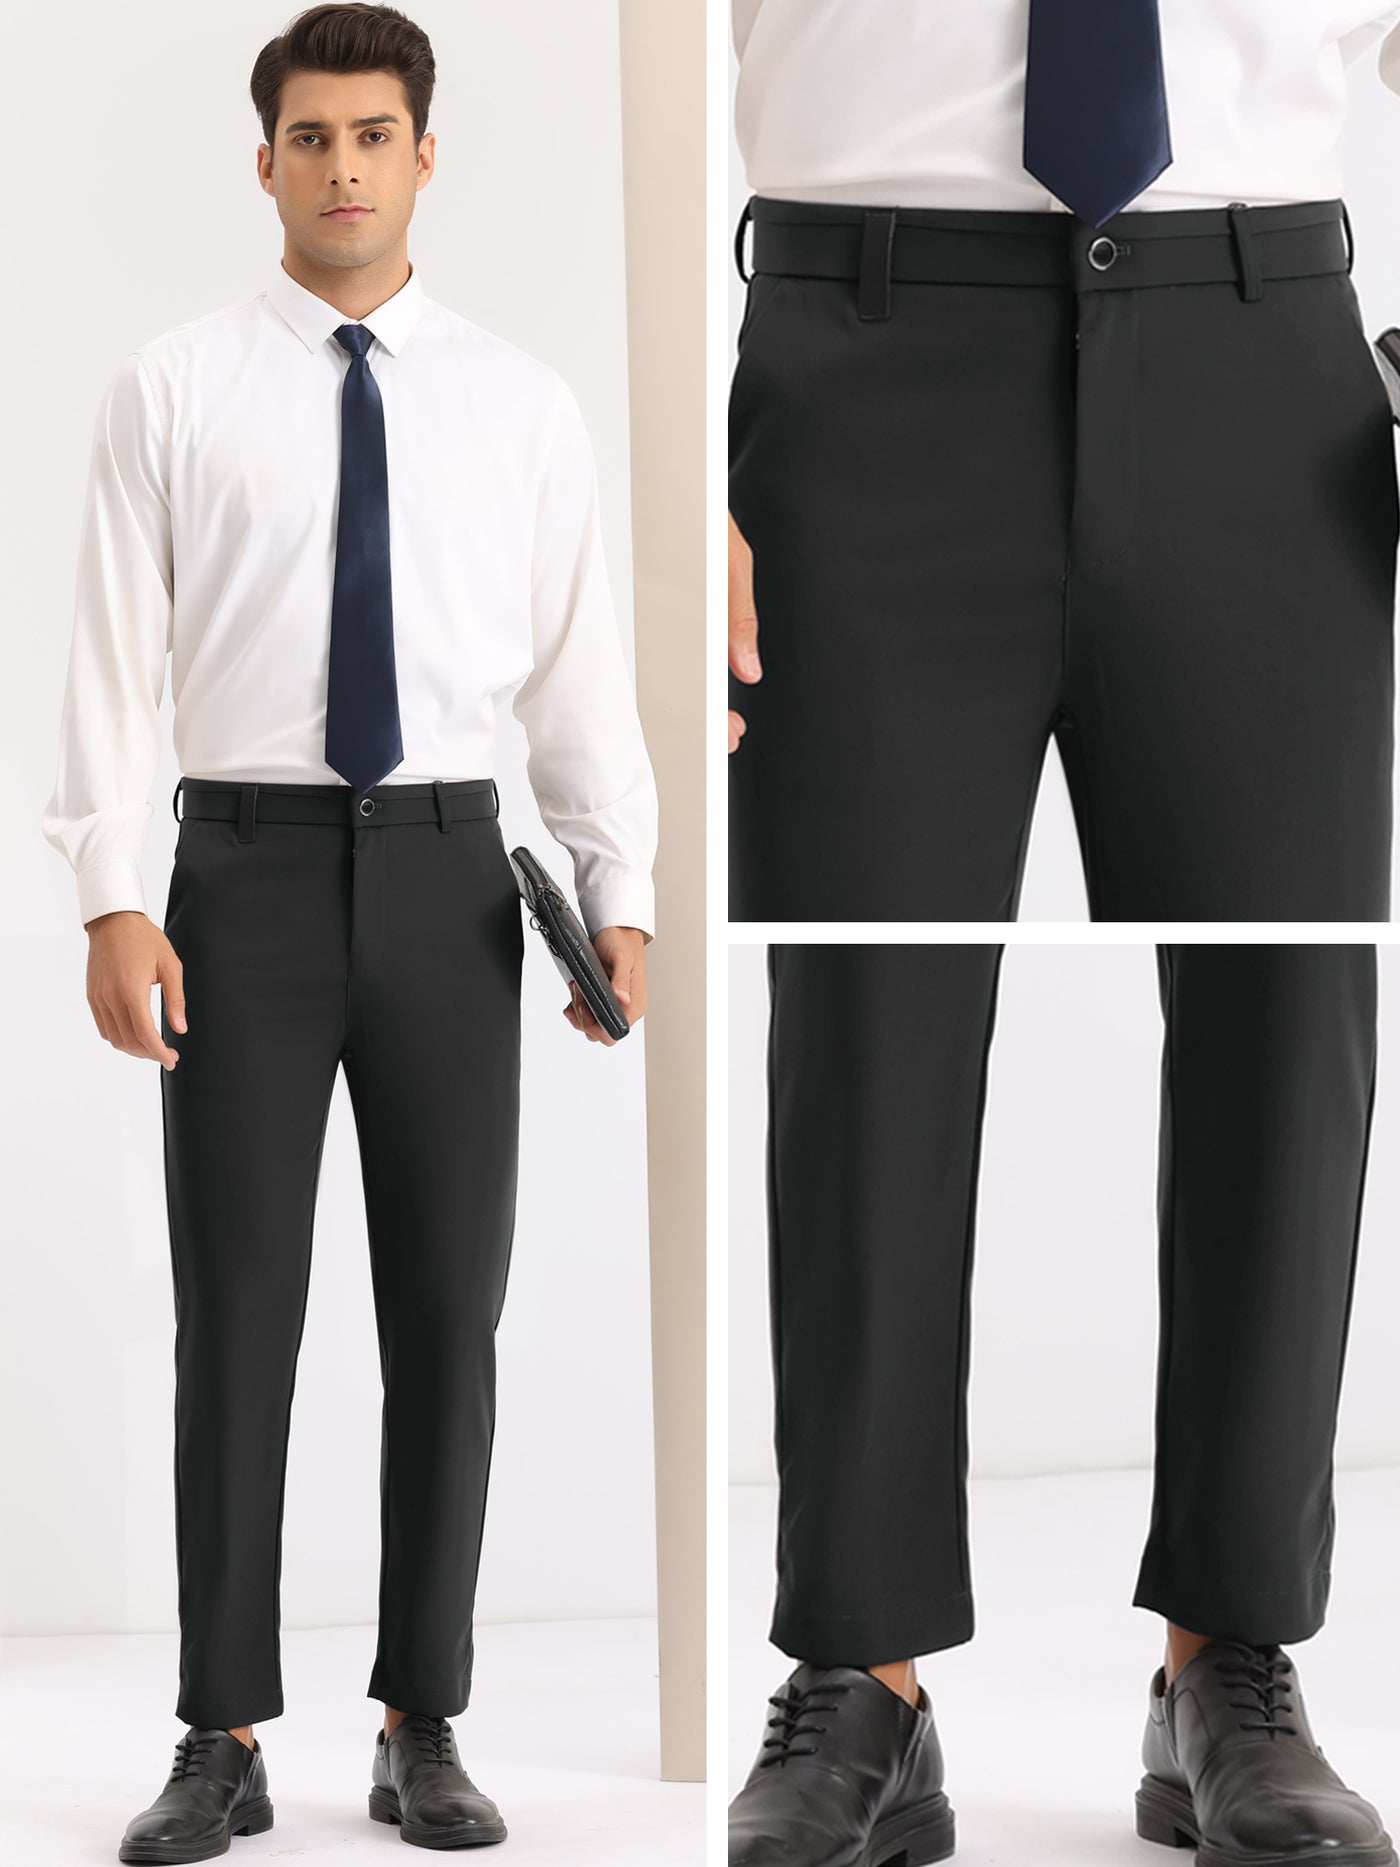 Bublédon Slim Fit Dress Pants for Men's Solid Color Flat Front Formal Trouser